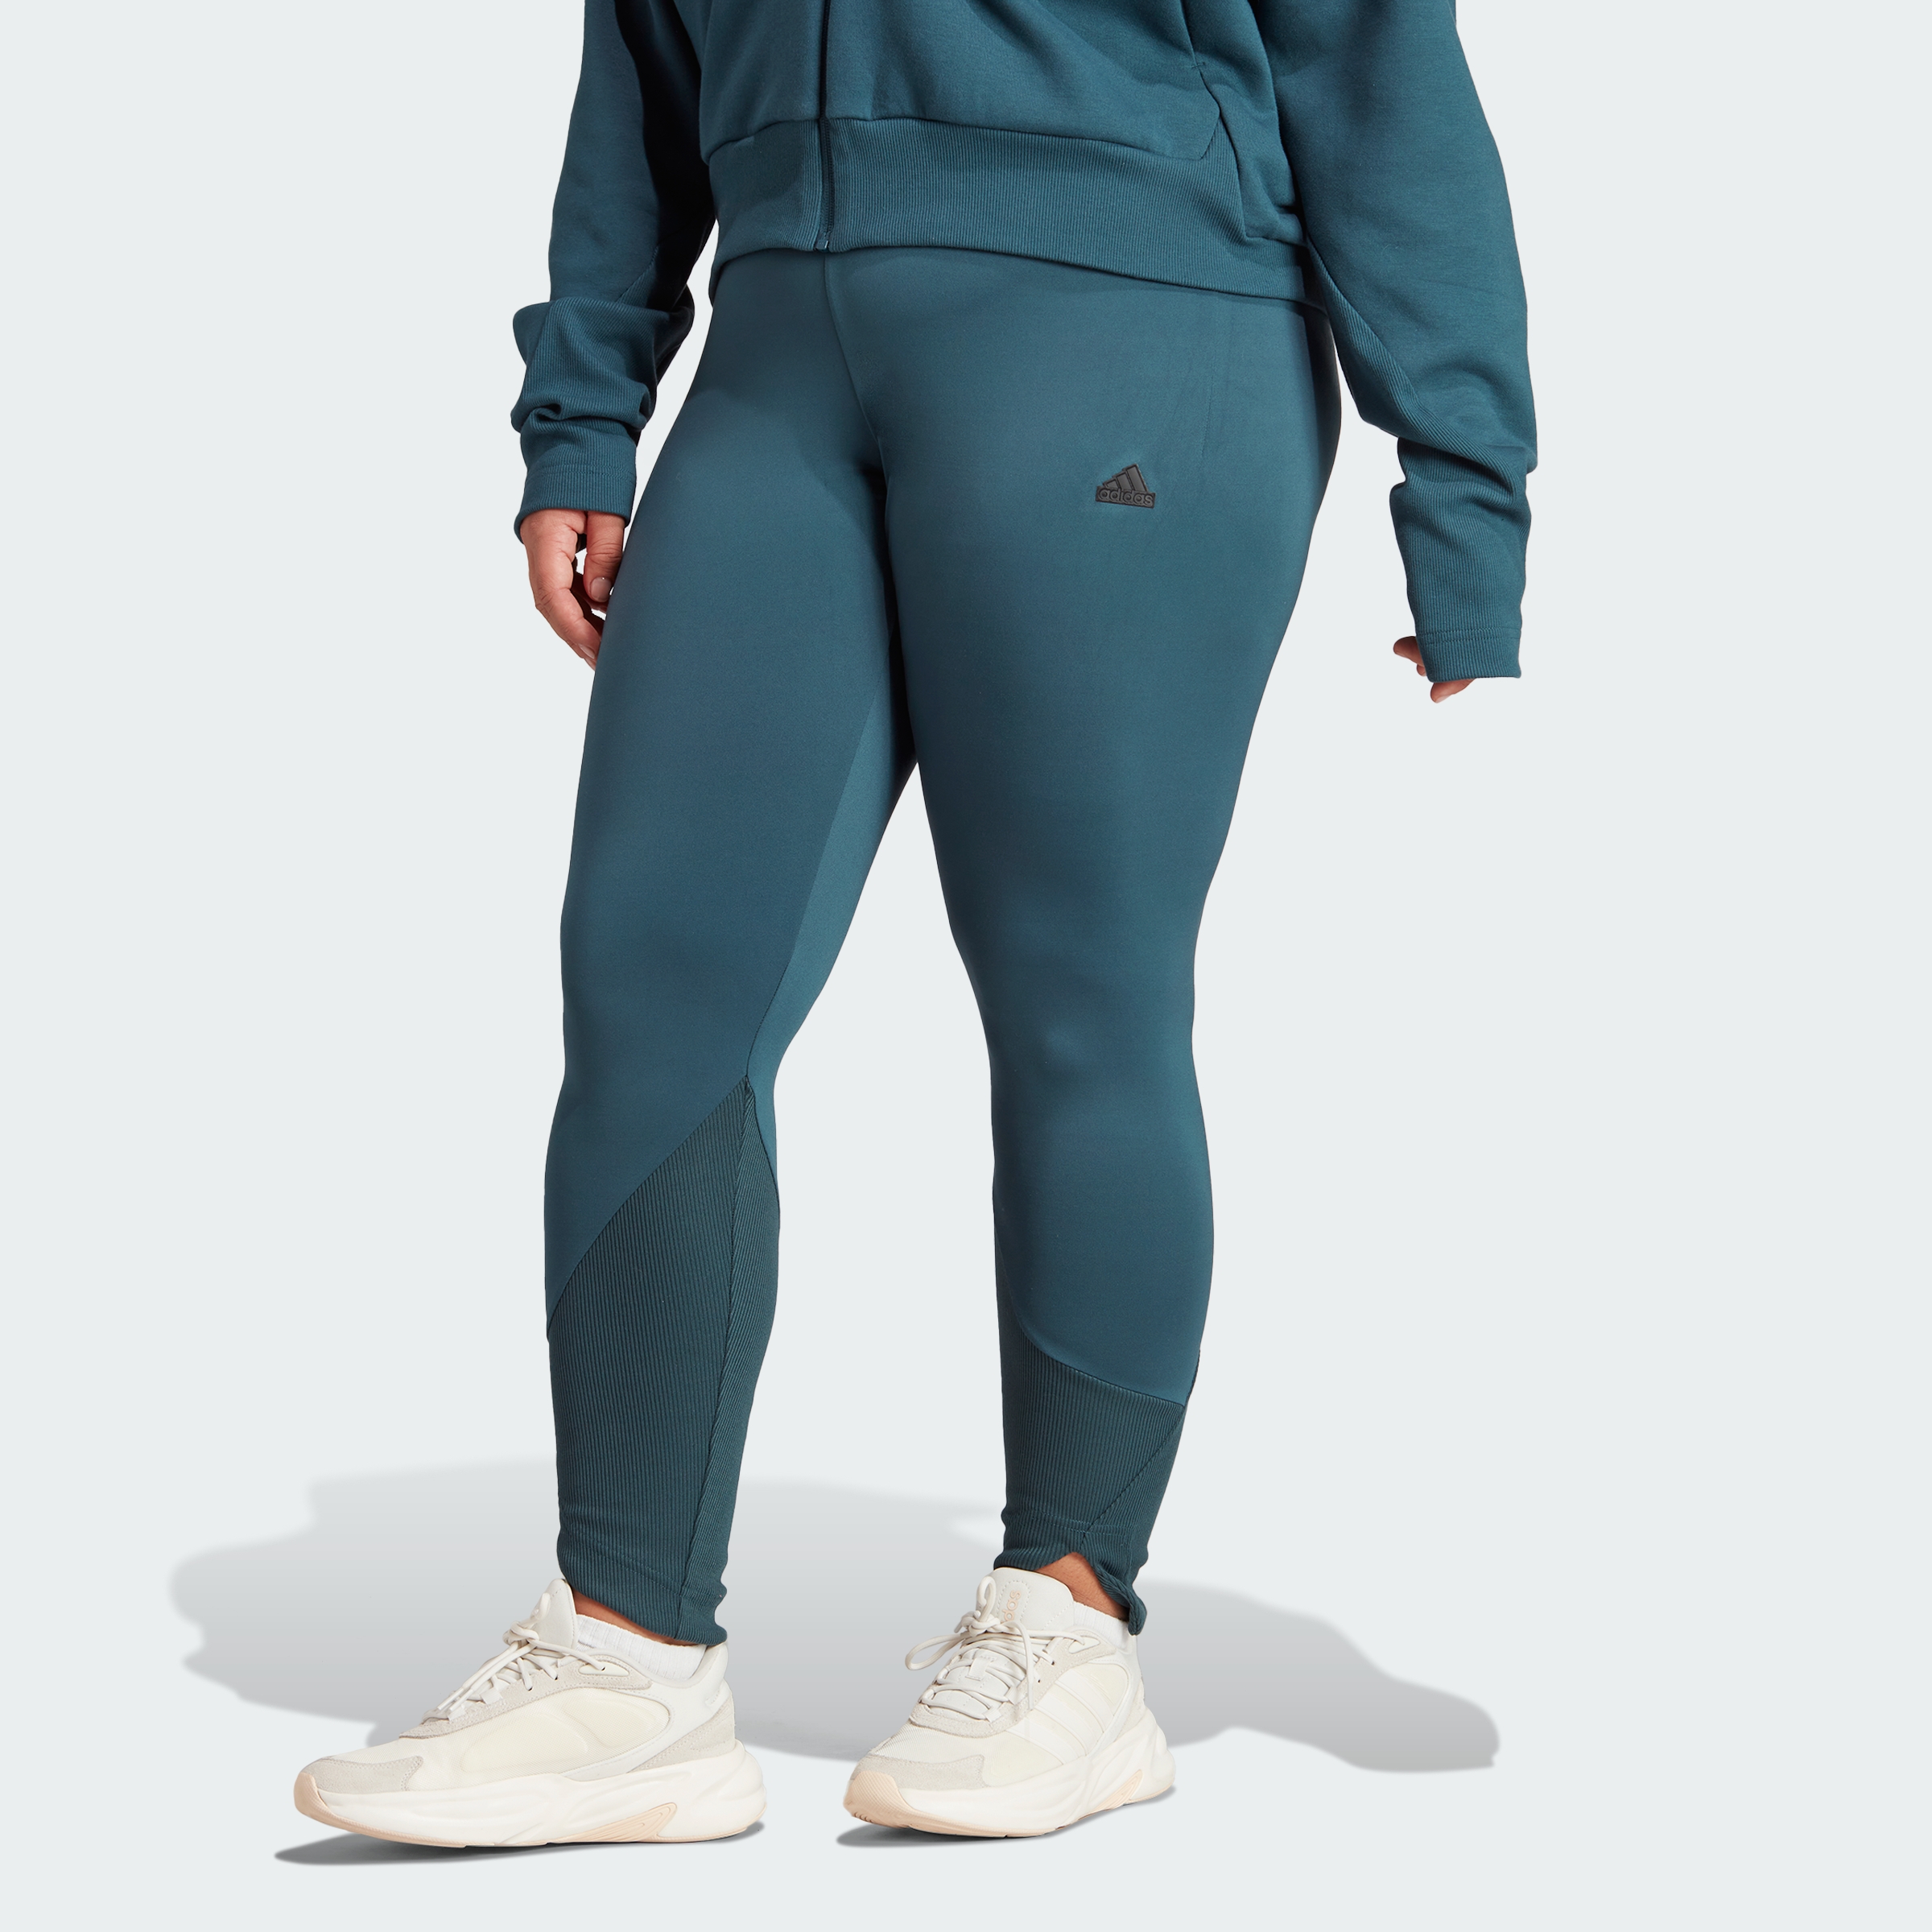 adidas Z.N.E. Leggings (Plus Size) Arctic Night 1X – Women